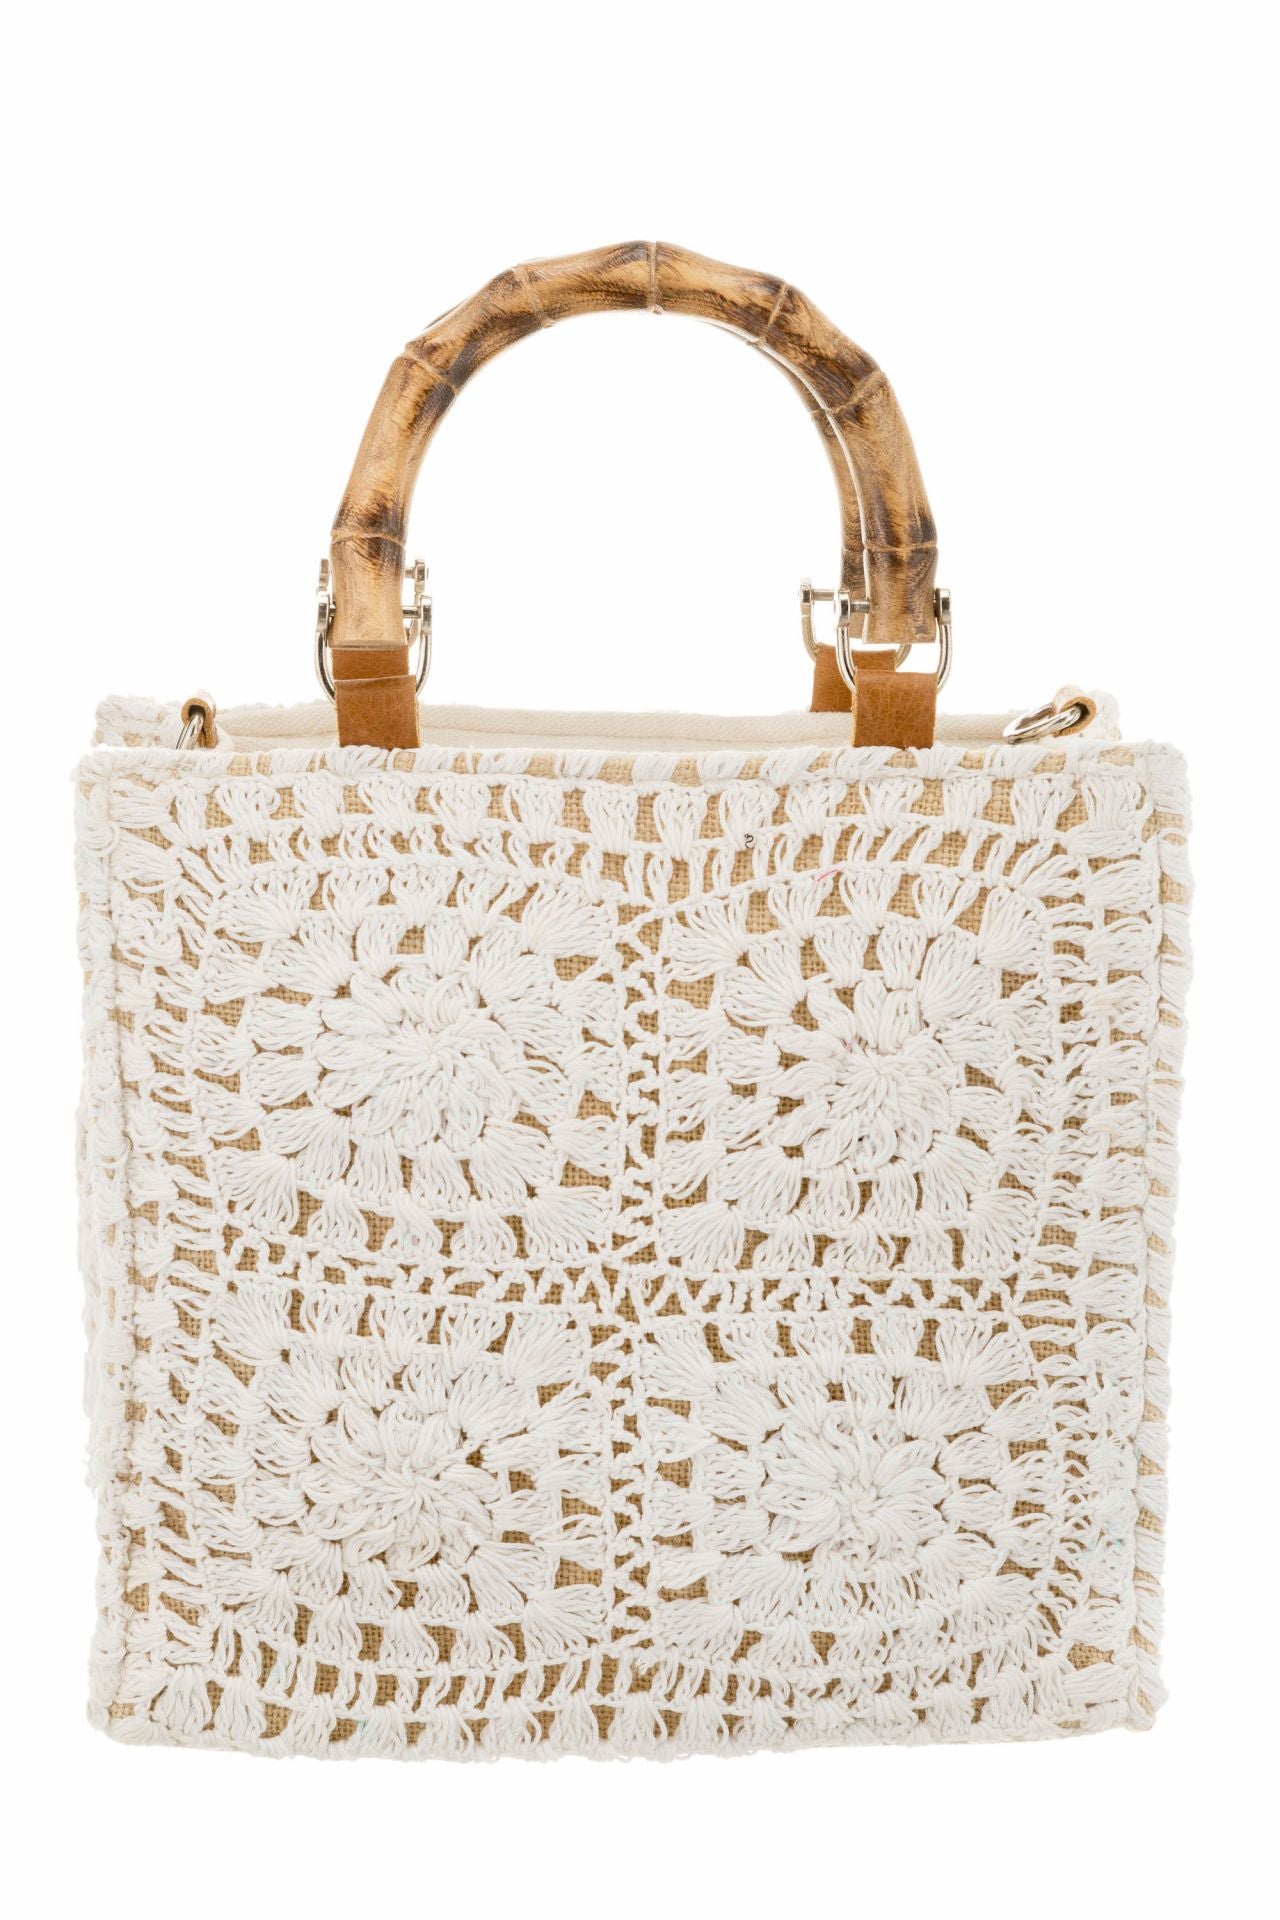 Bamboo Handle Crochet Handbag - UKAI